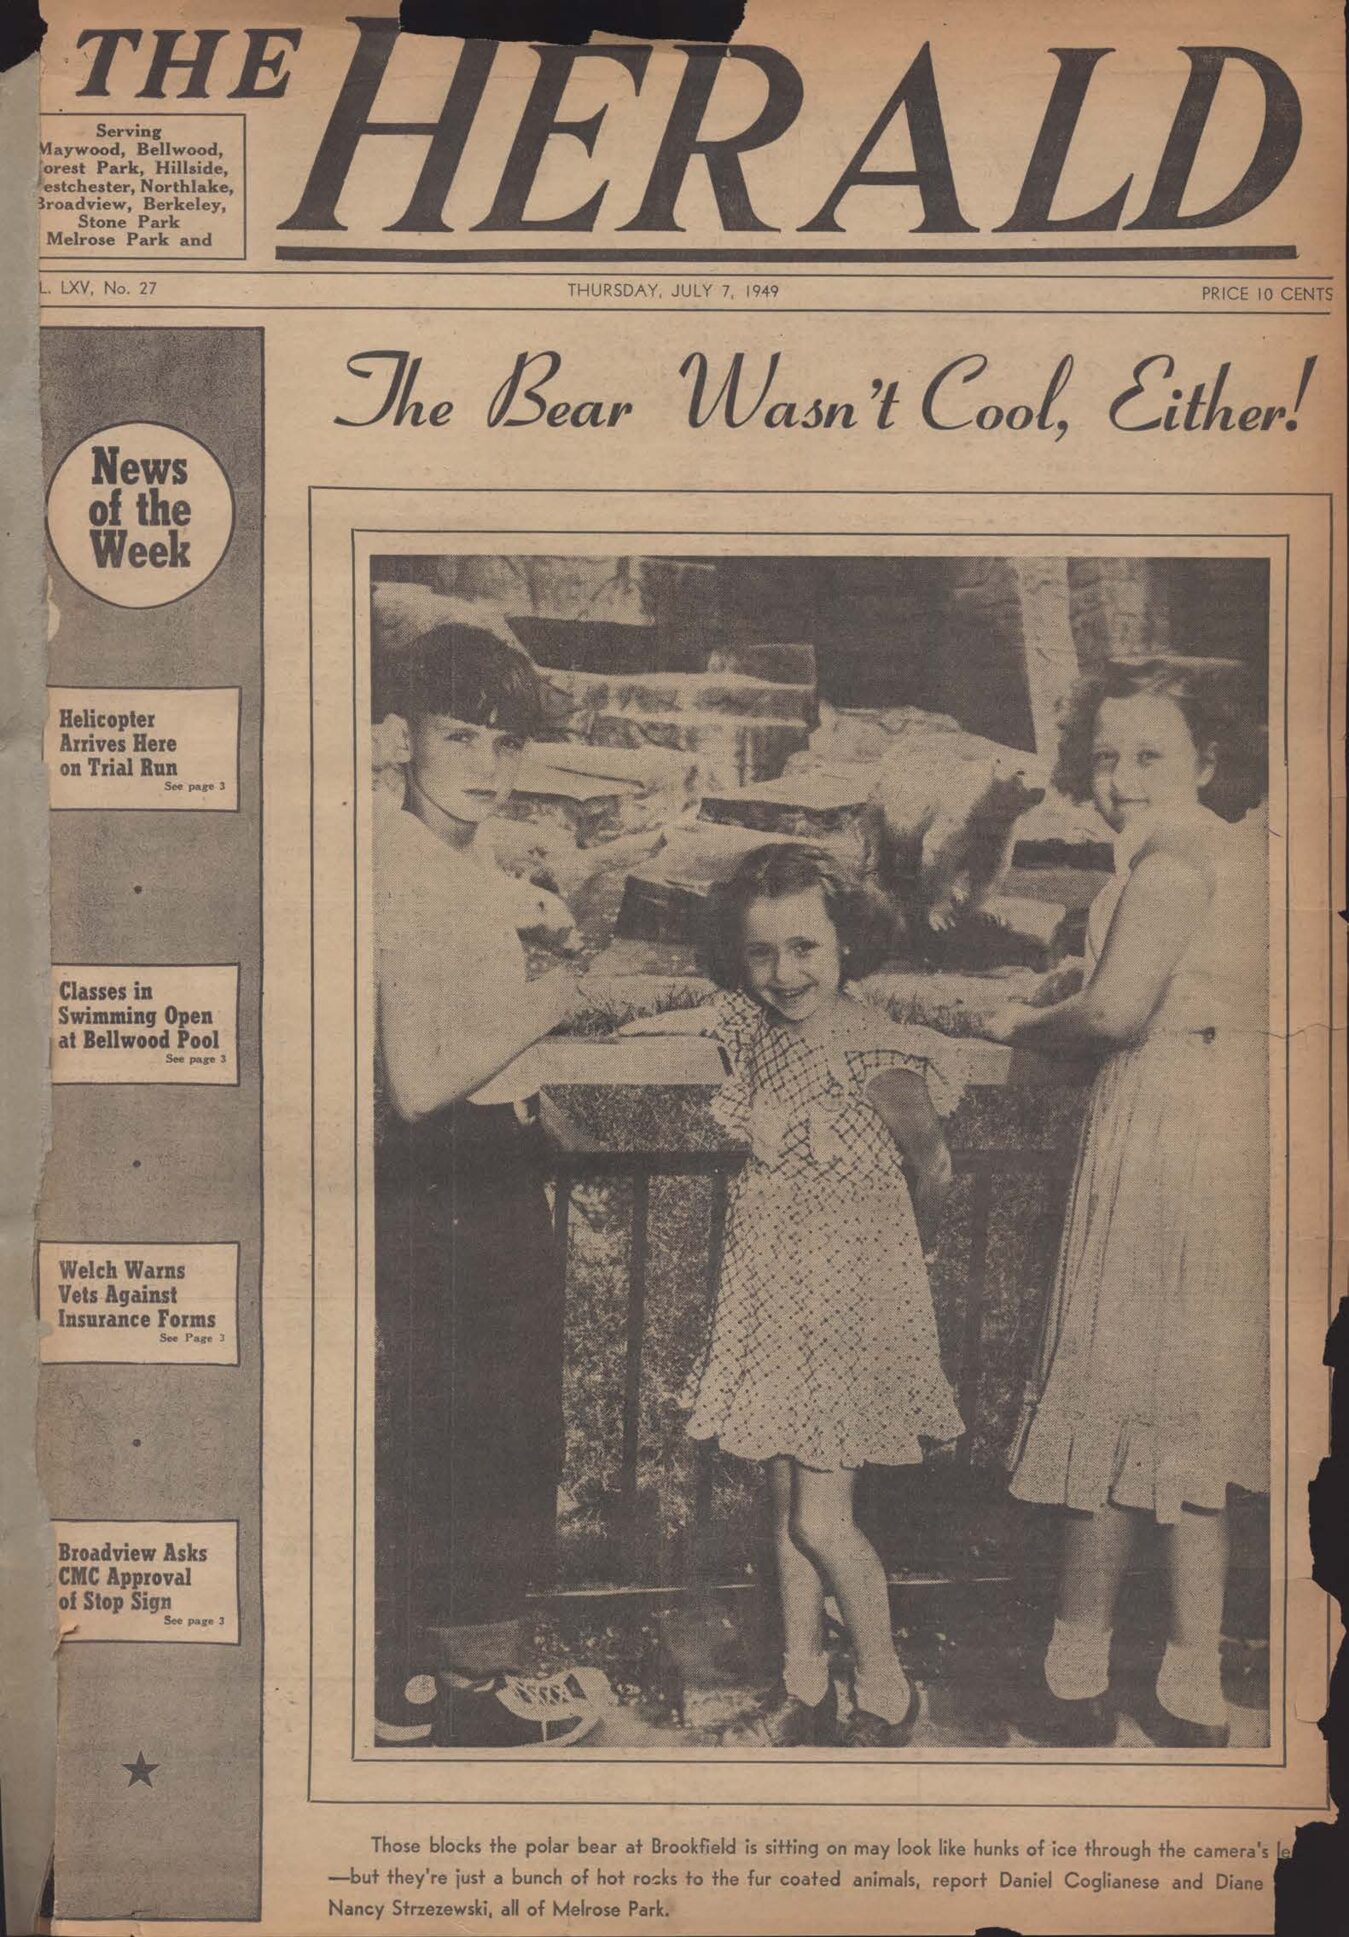 The Herald – 19490707